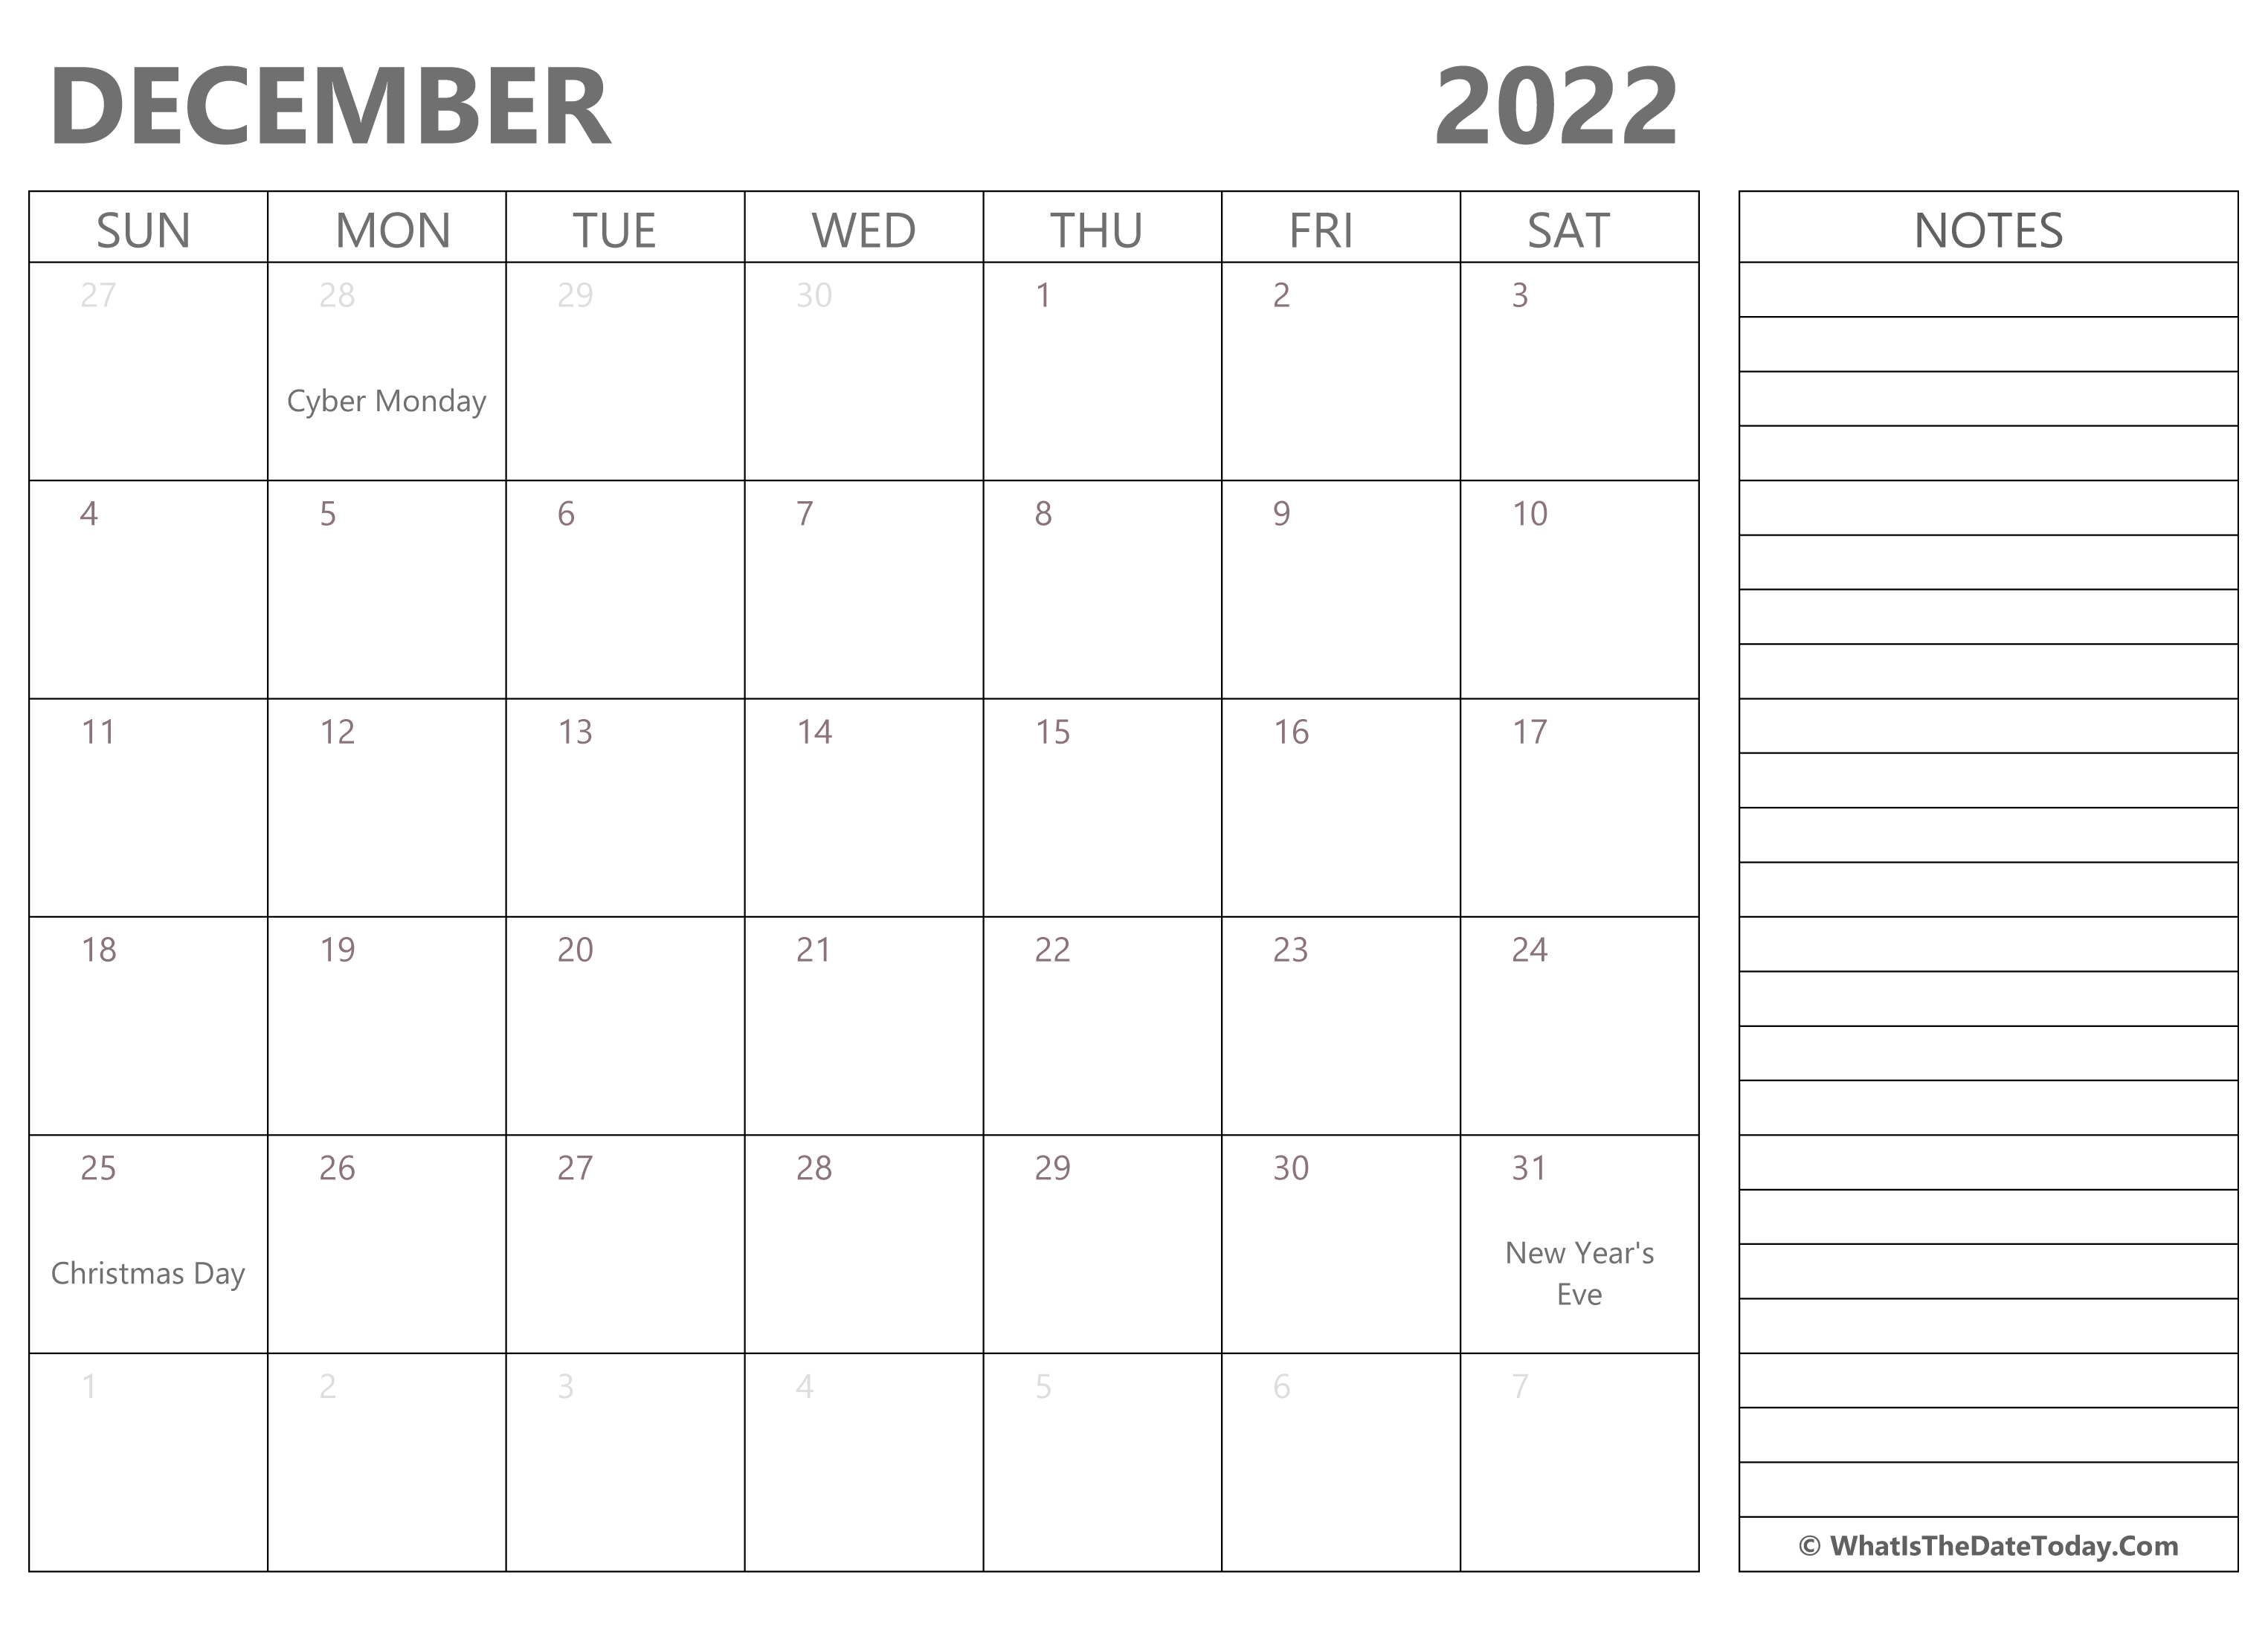 Editable December 2022 Calendar Editable December 2022 Calendar With Holidays And Notes |  Whatisthedatetoday.com